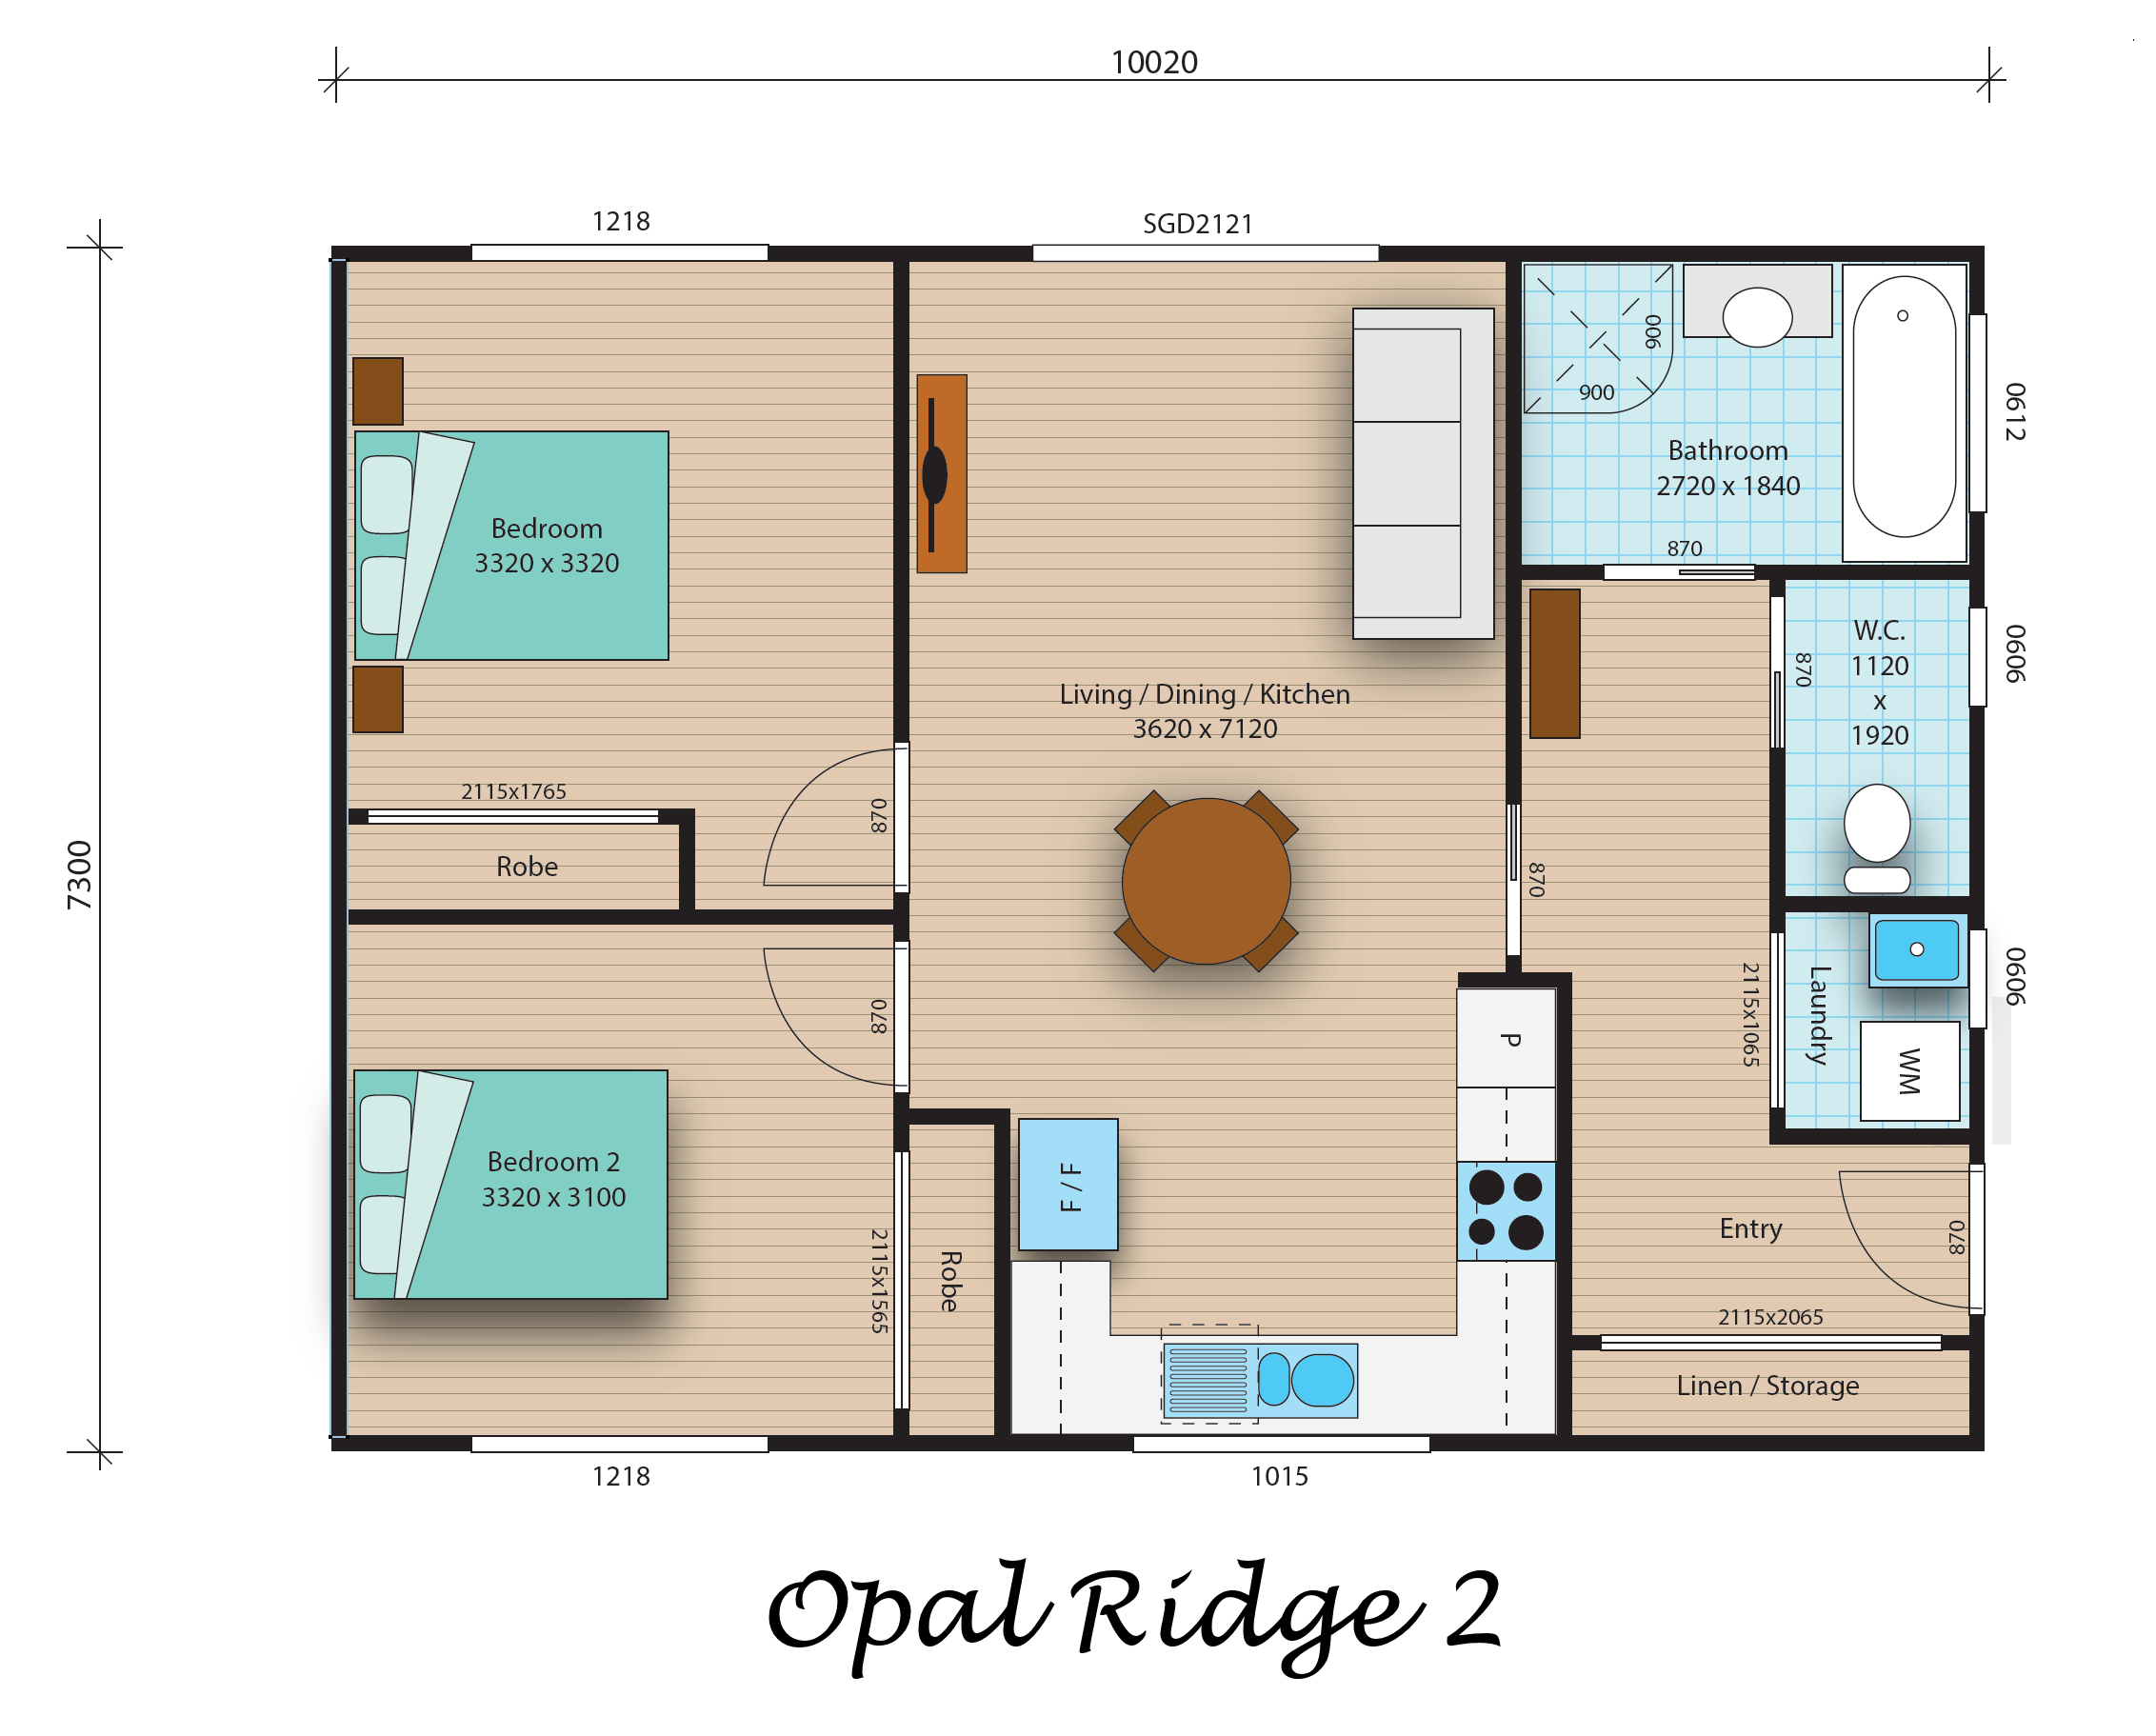 Opal Ridge 2 floorplan image